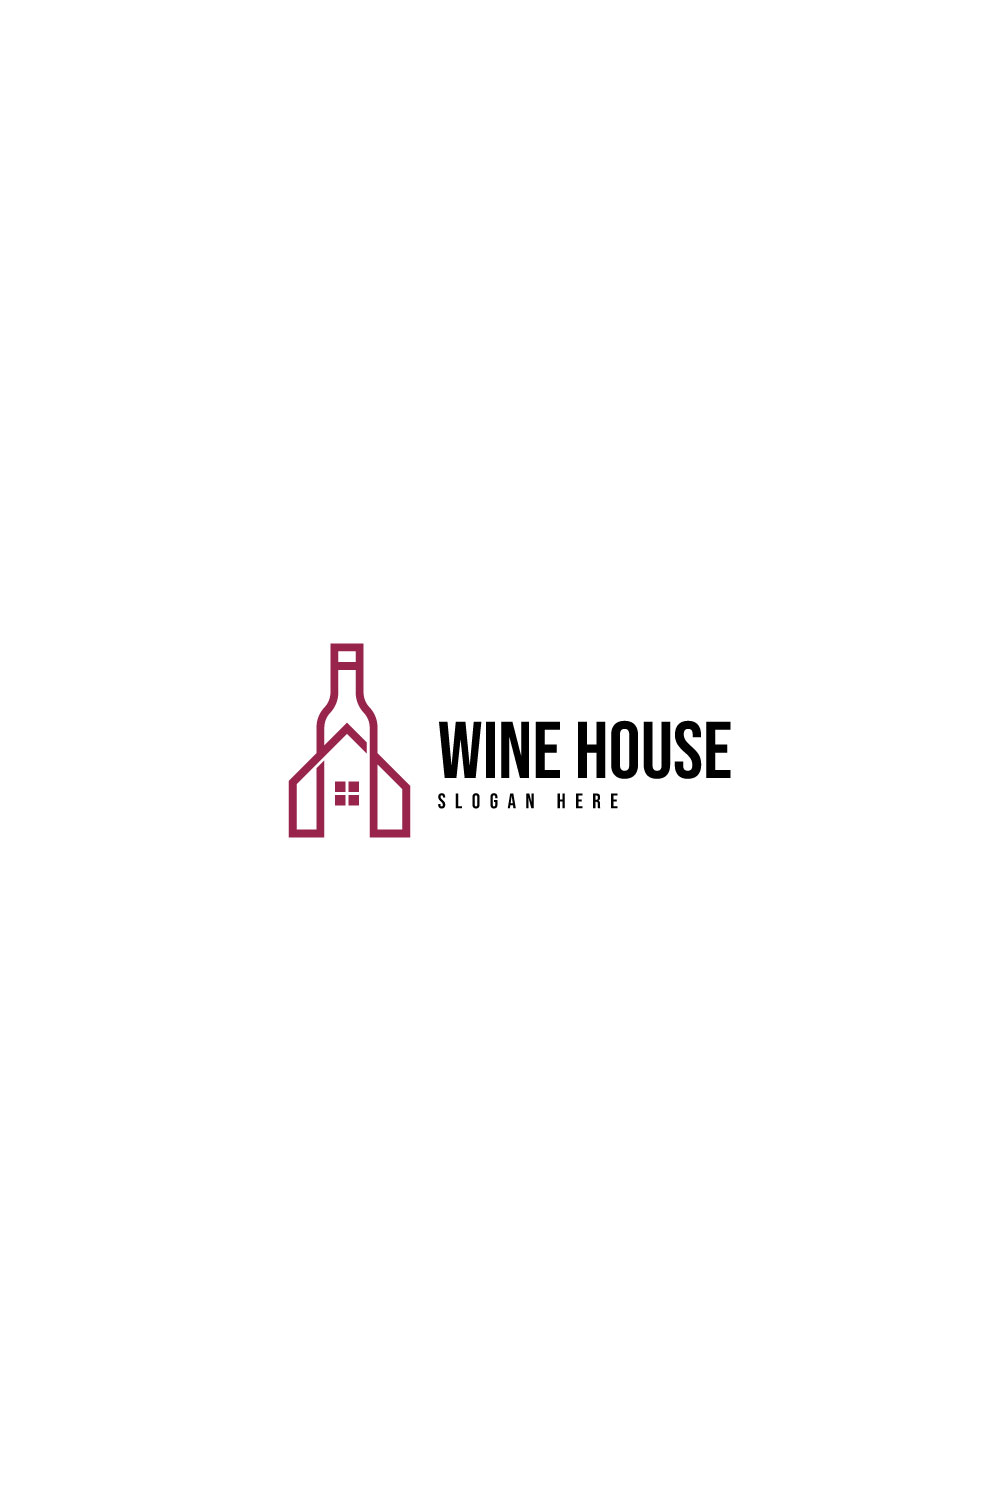 Wine House Logo design vector pinterest preview image.